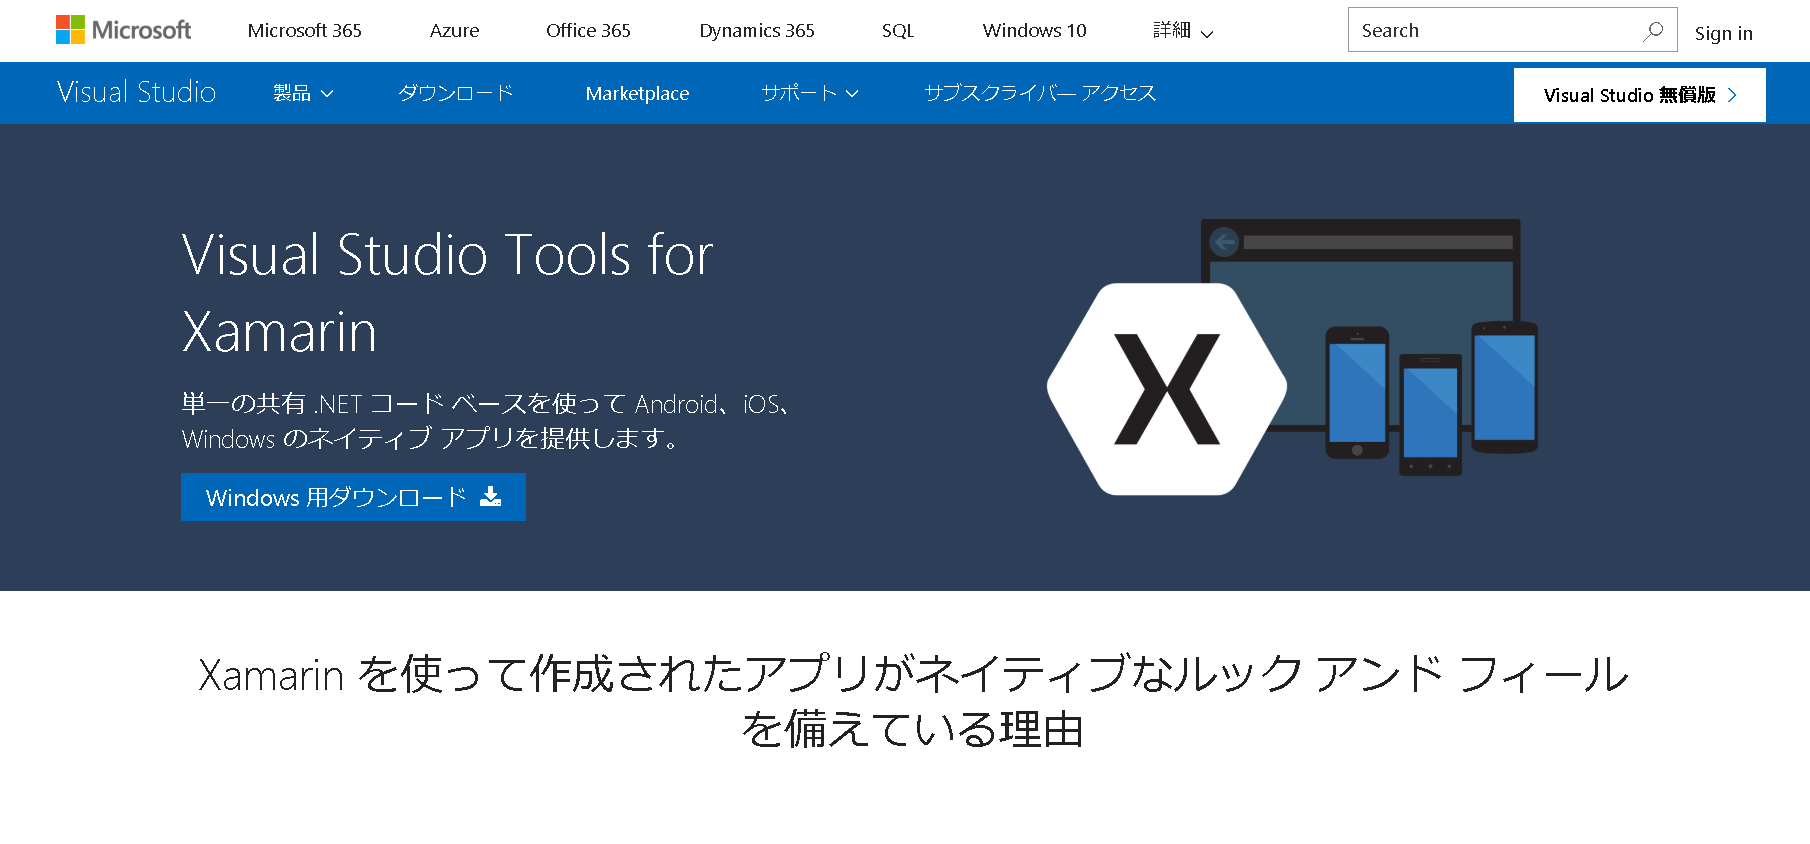 Visual Studio Tools for Xamarin